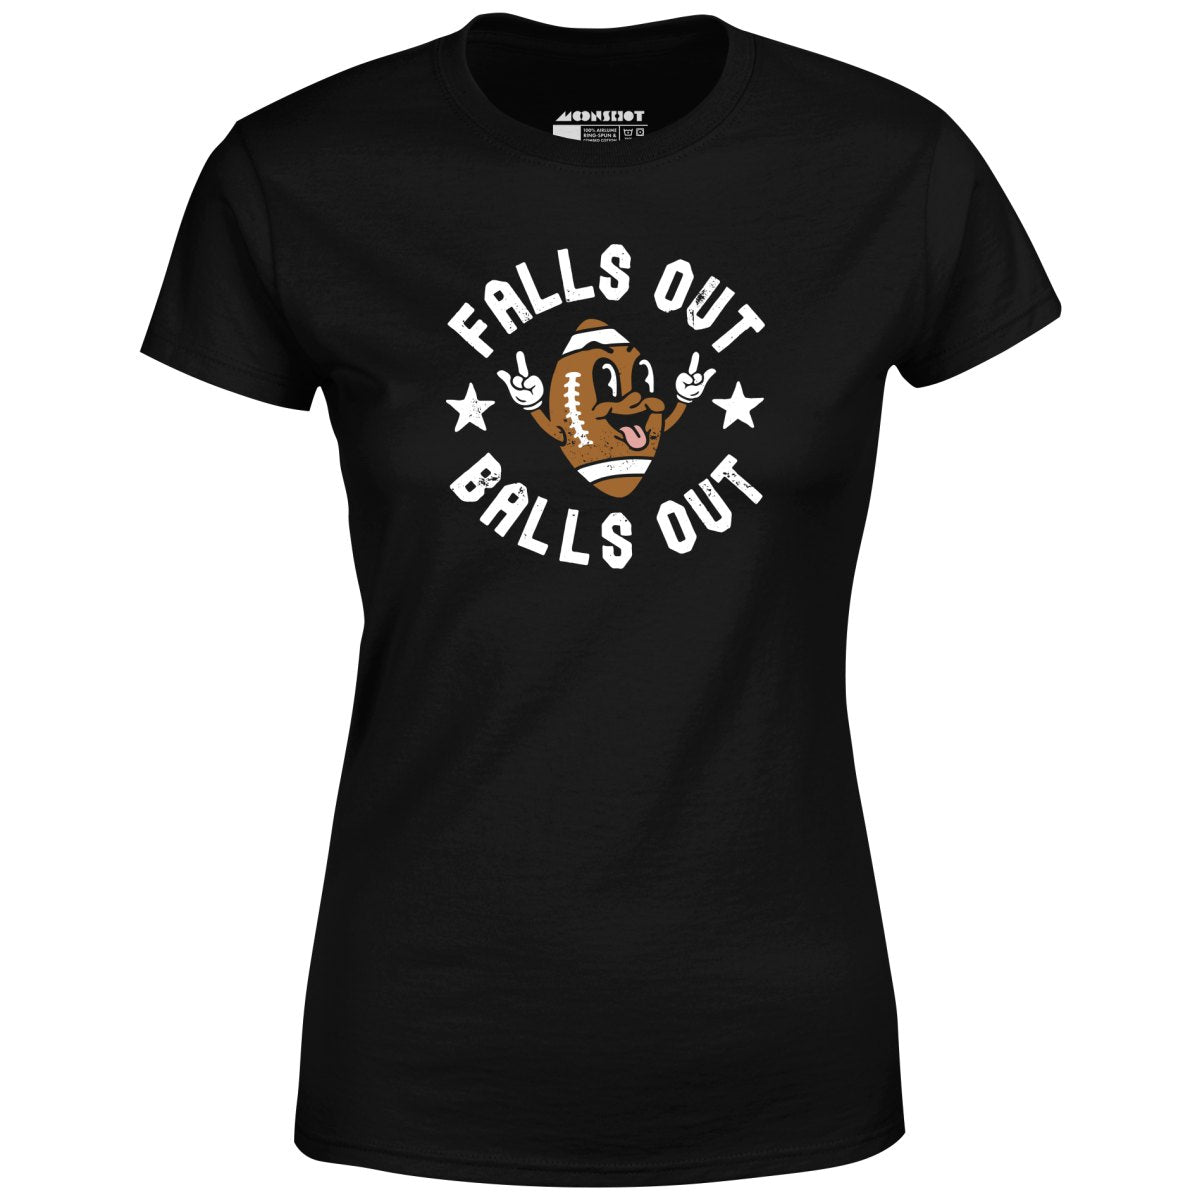 Falls Out Balls Out - Women's T-Shirt